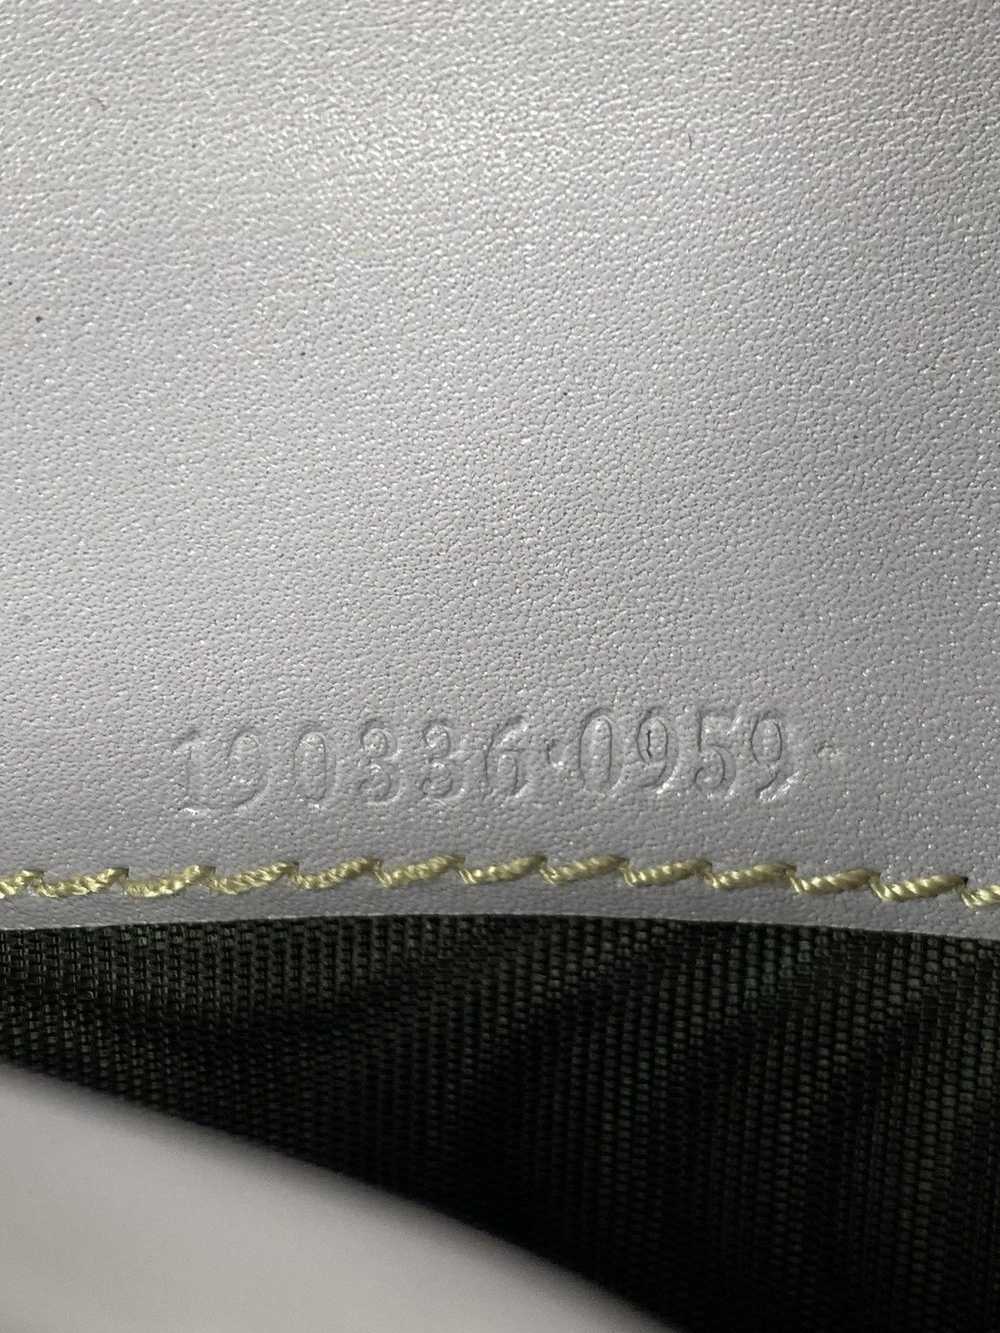 Gucci Gucci GG Guccissima leather trifold wallet - image 6